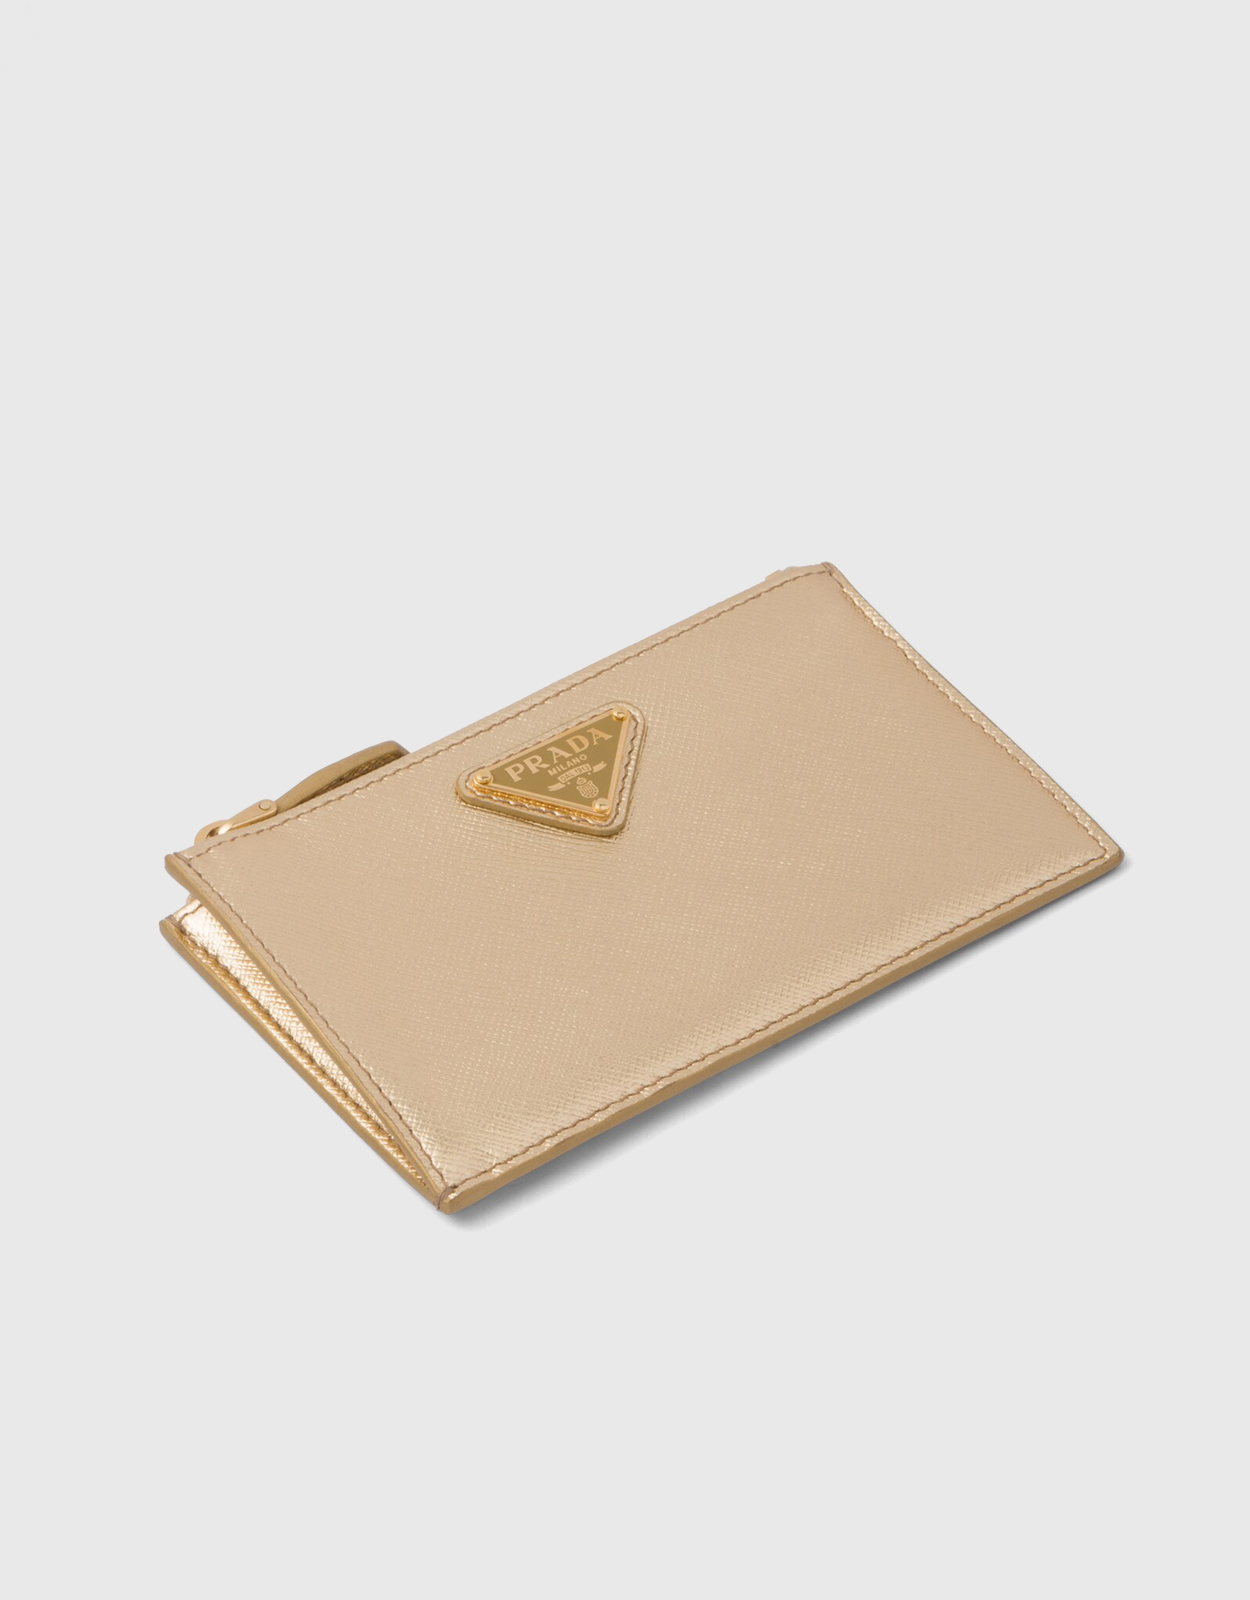 Prada Saffiano Leather Card Wallet